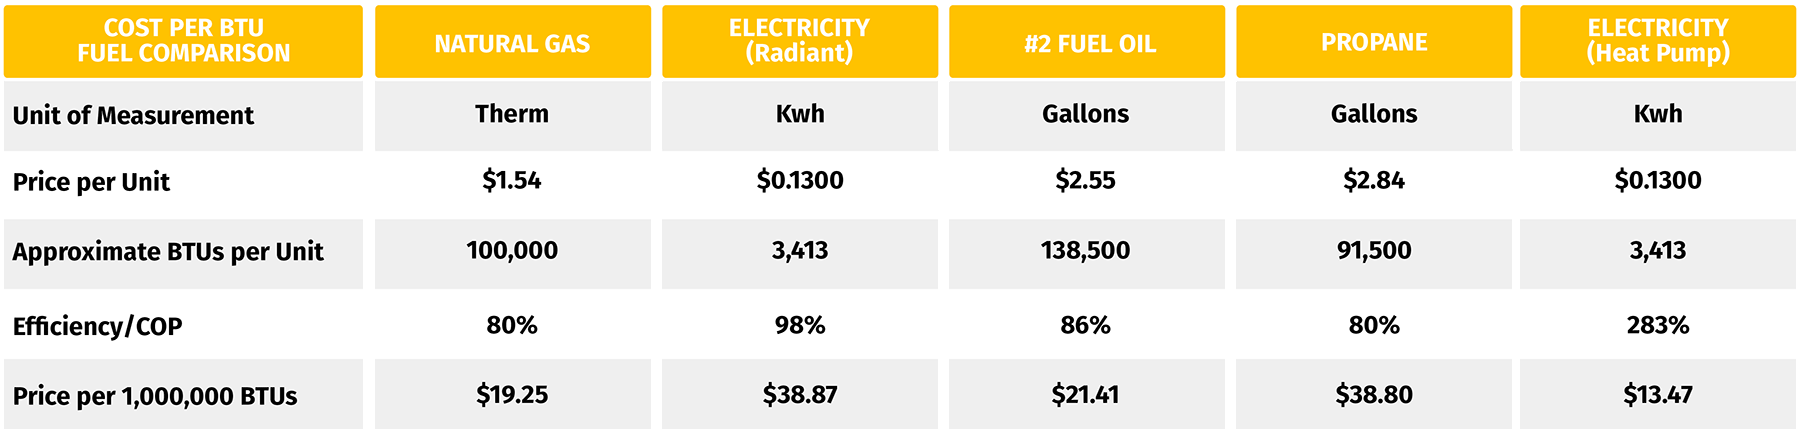 Electrification Cost Per BTU Comparison Chart